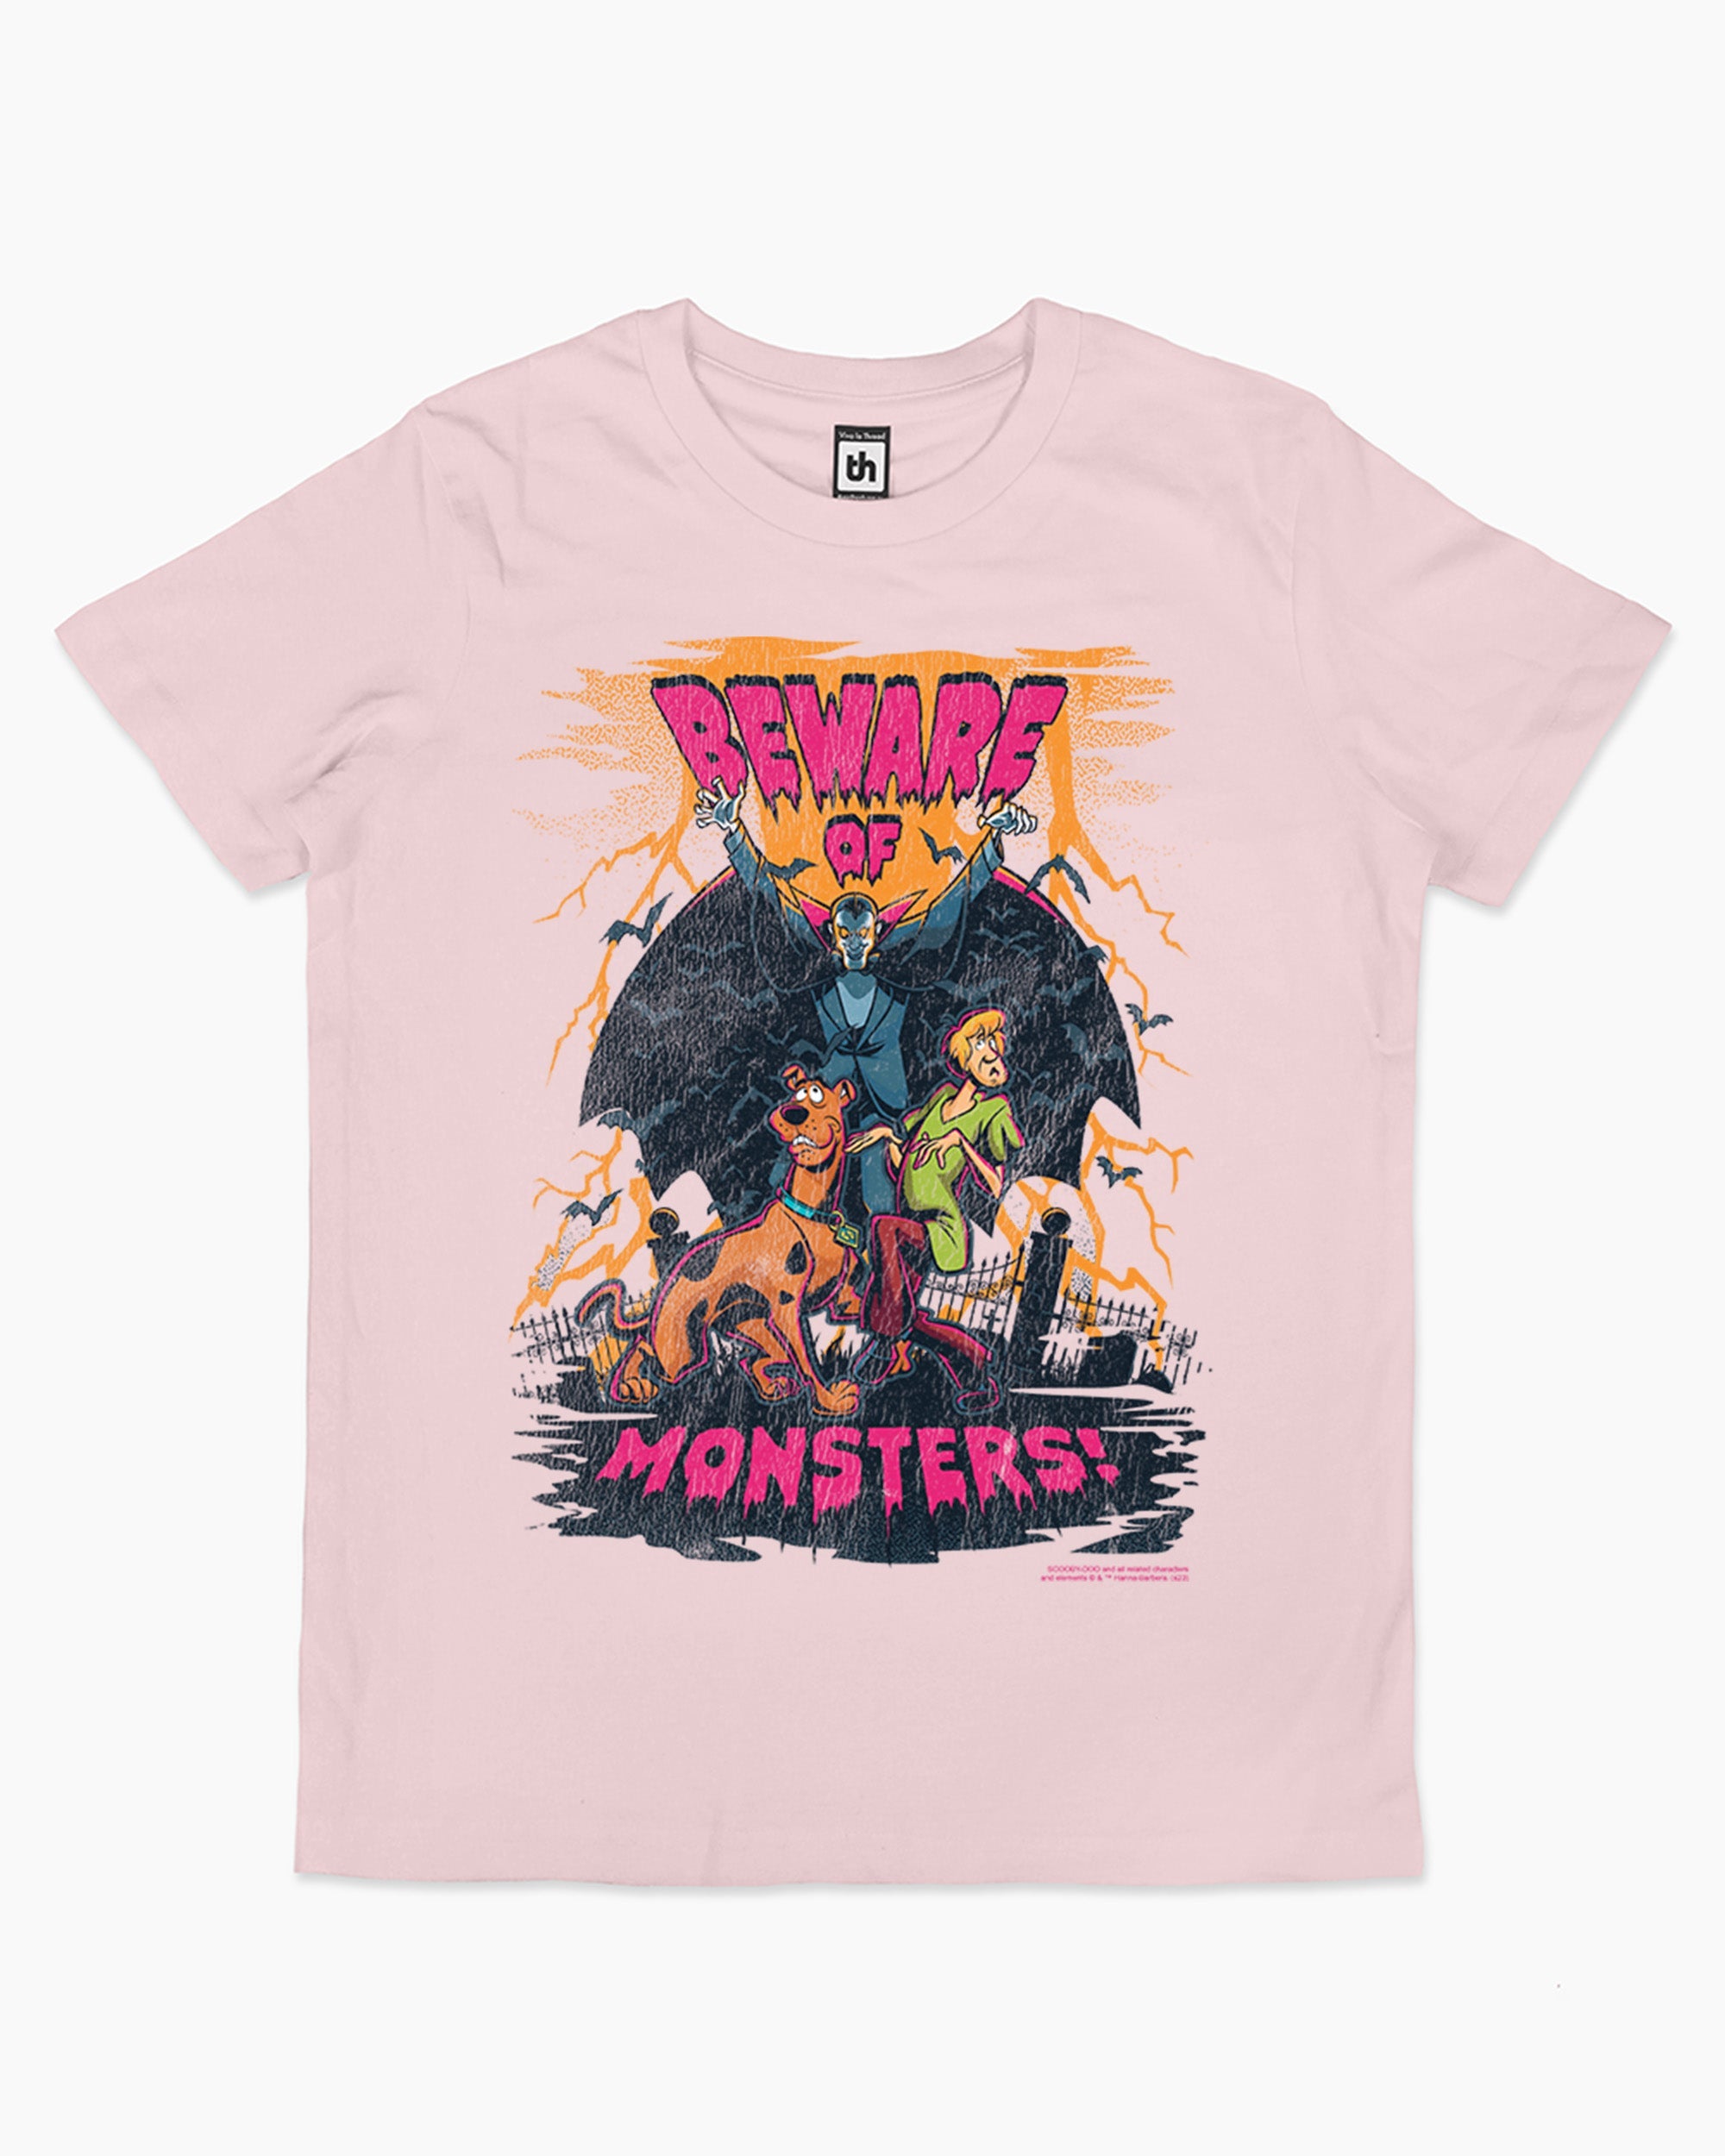 Beware of Monsters Kids T-Shirt Australia Online Pink